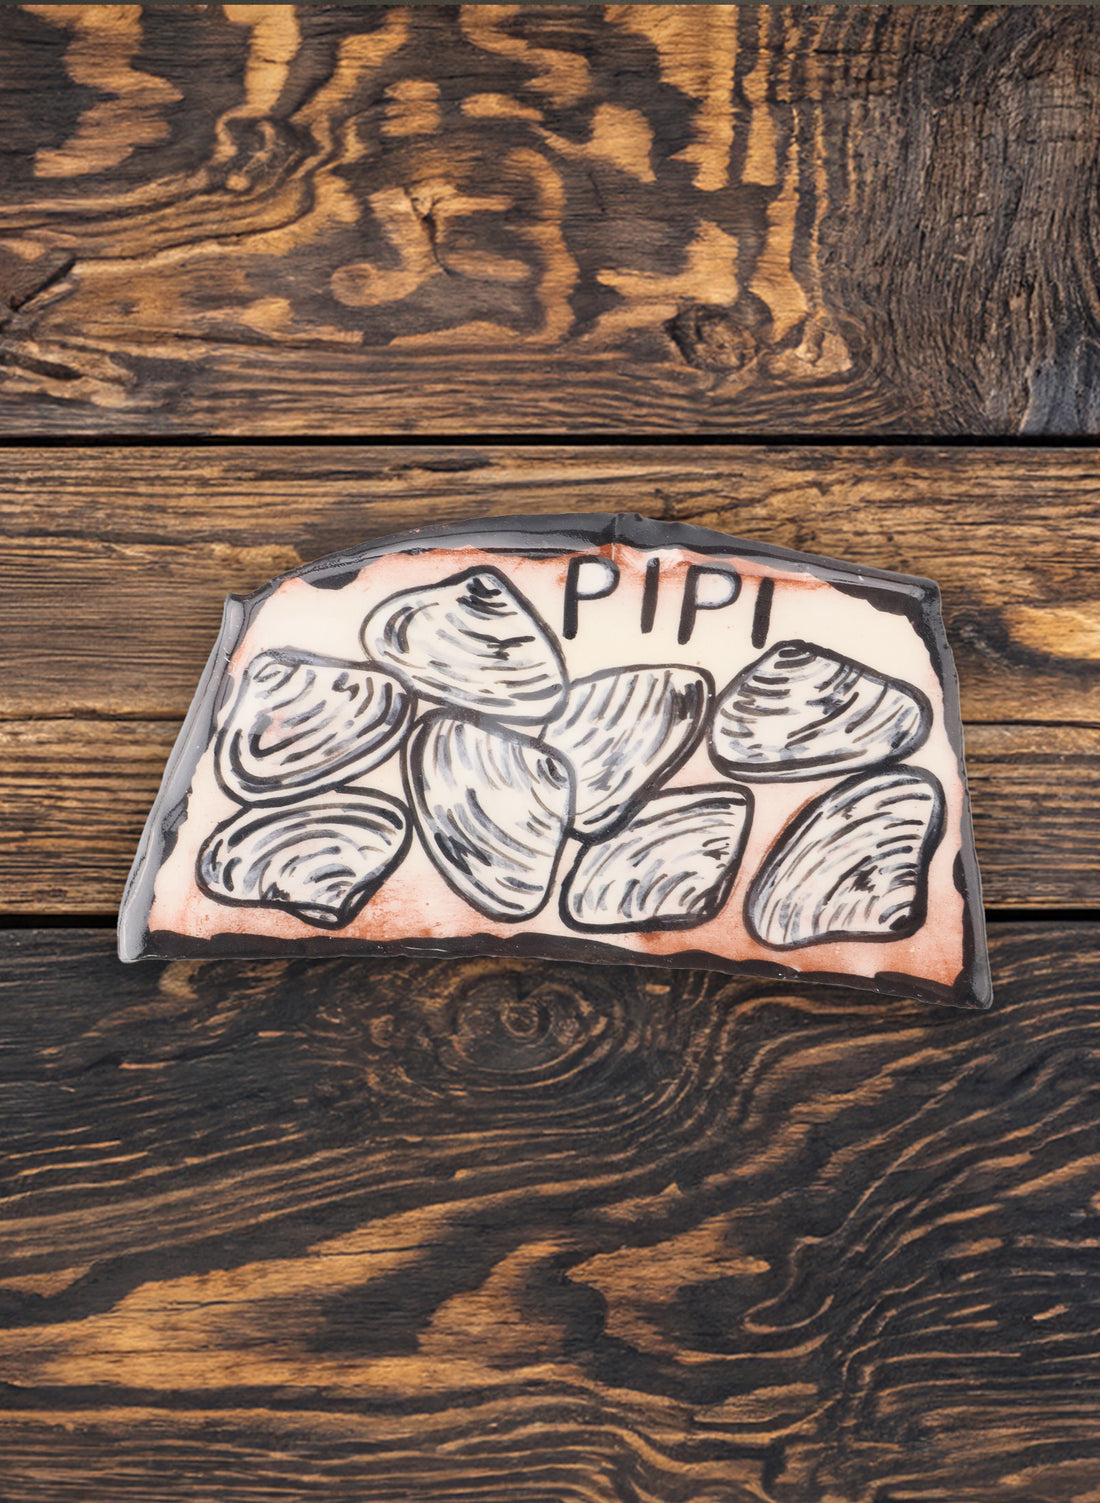 Wall Tile - Pipi